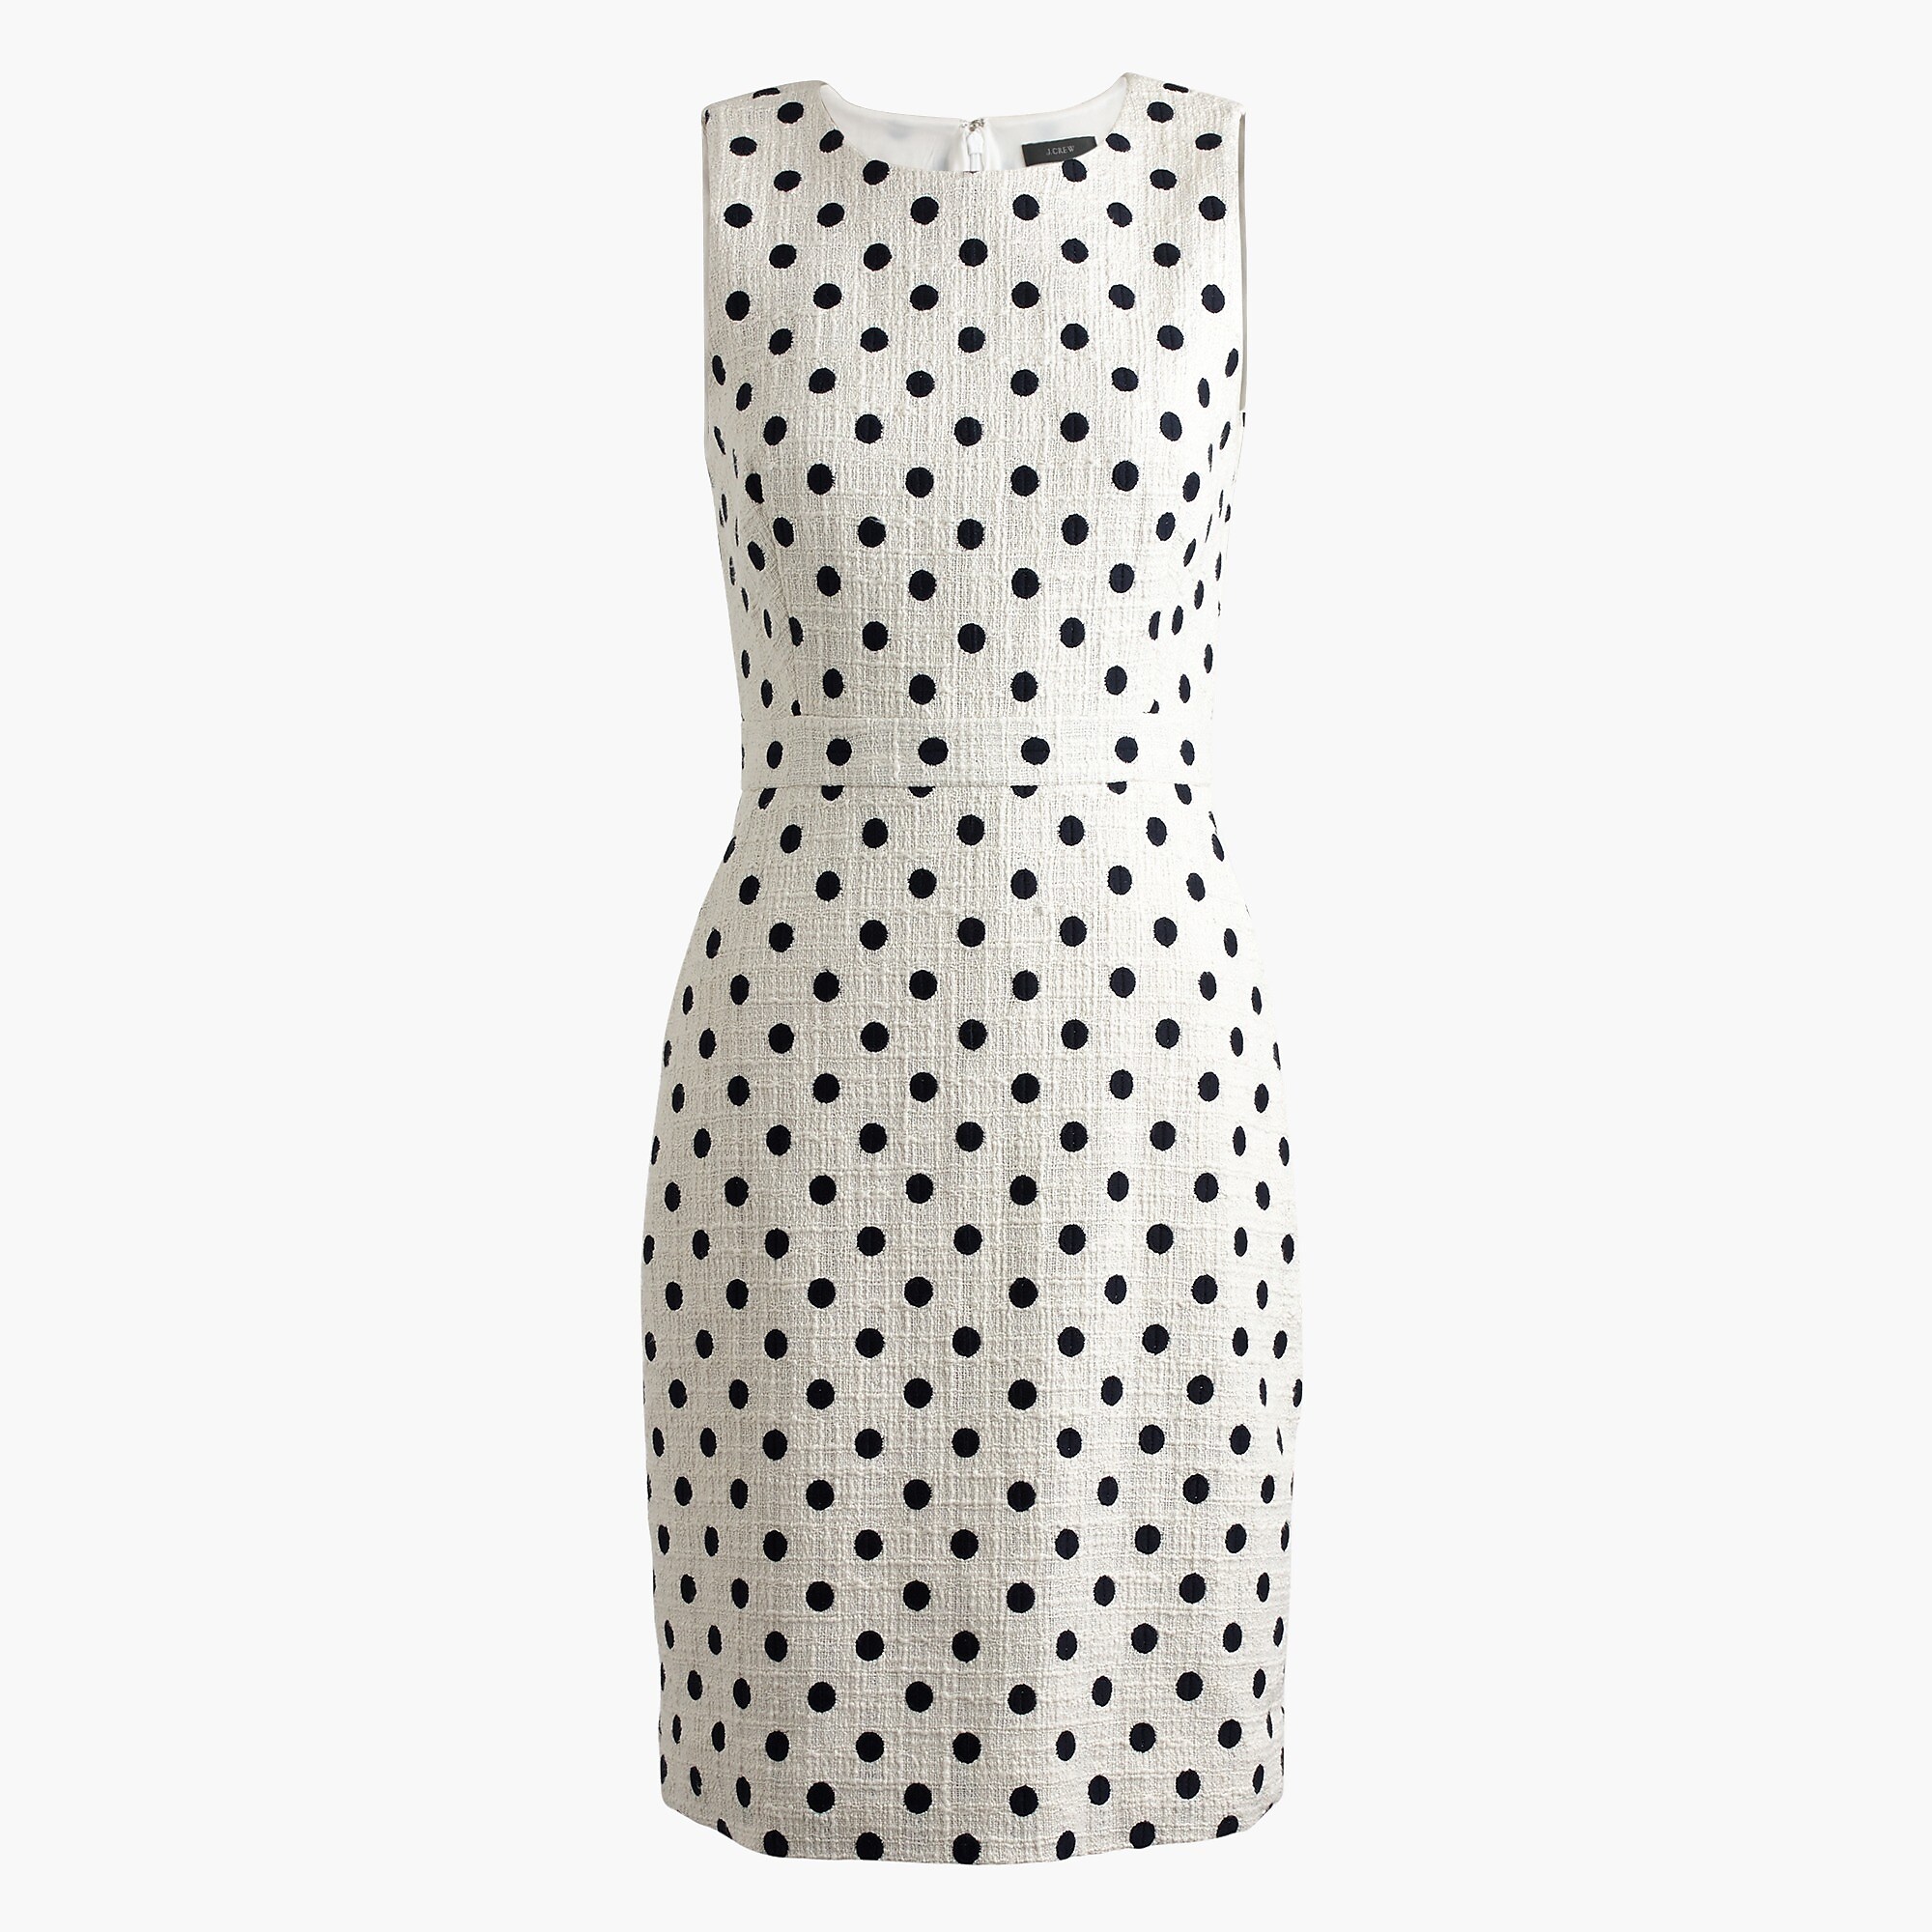 Petite sheath dress in polka dot textured tweed.